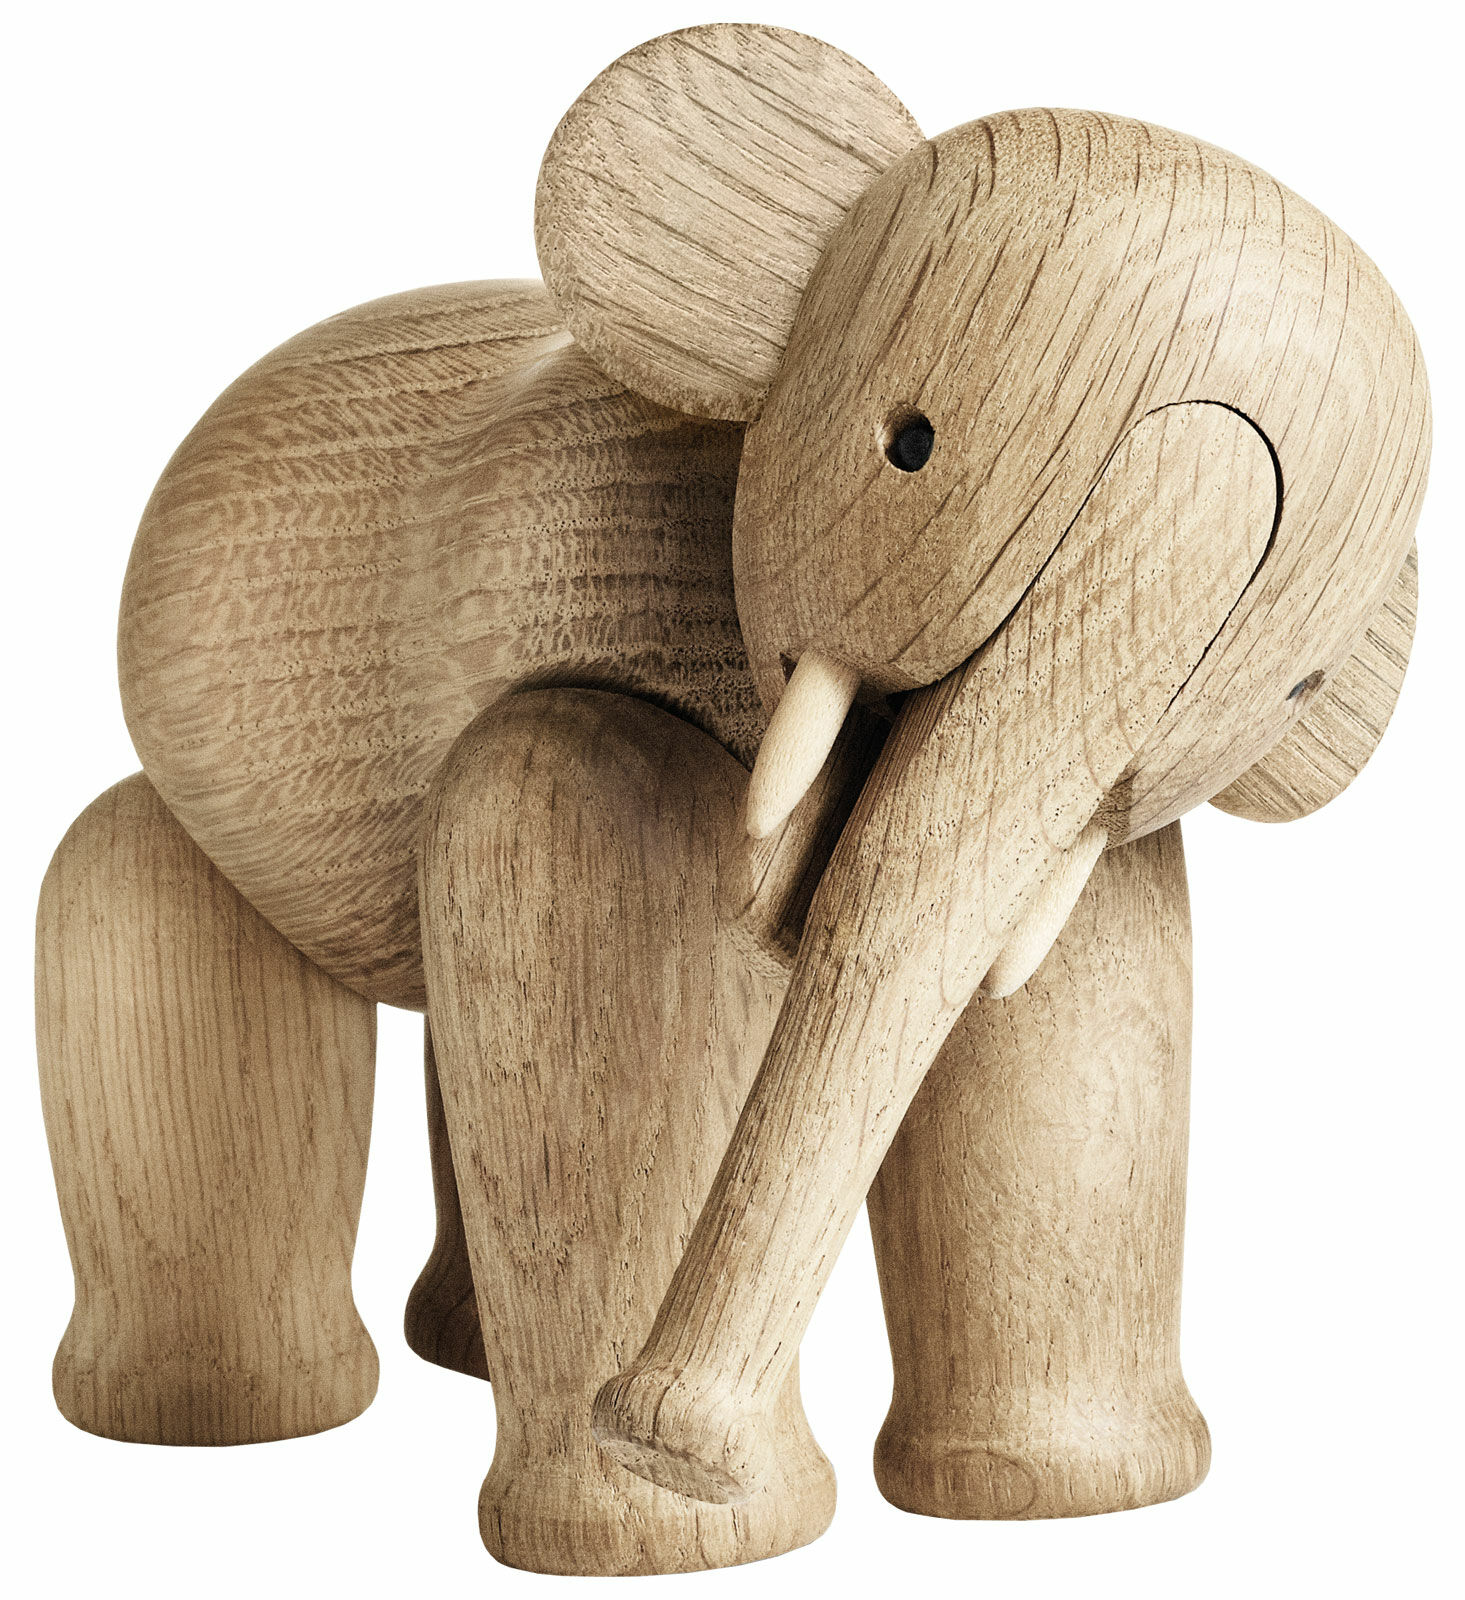 Wooden figure "Elephant" by Kay Bojesen